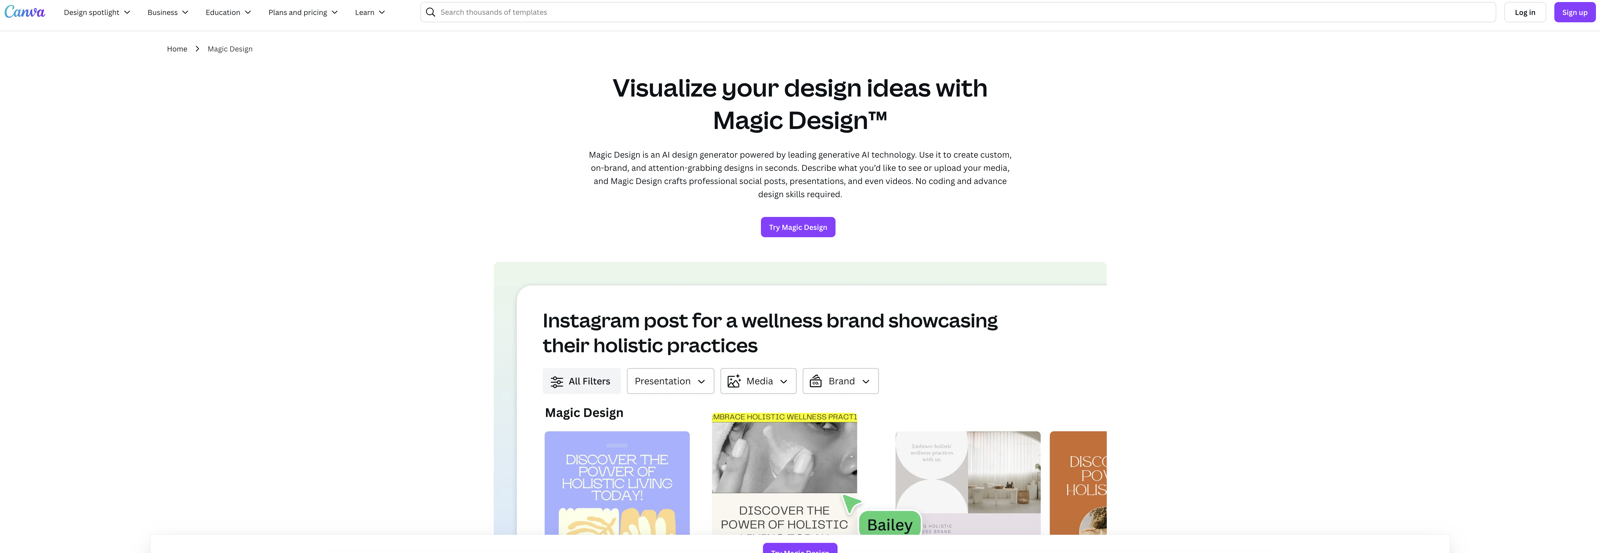 Magic Design by Canva website